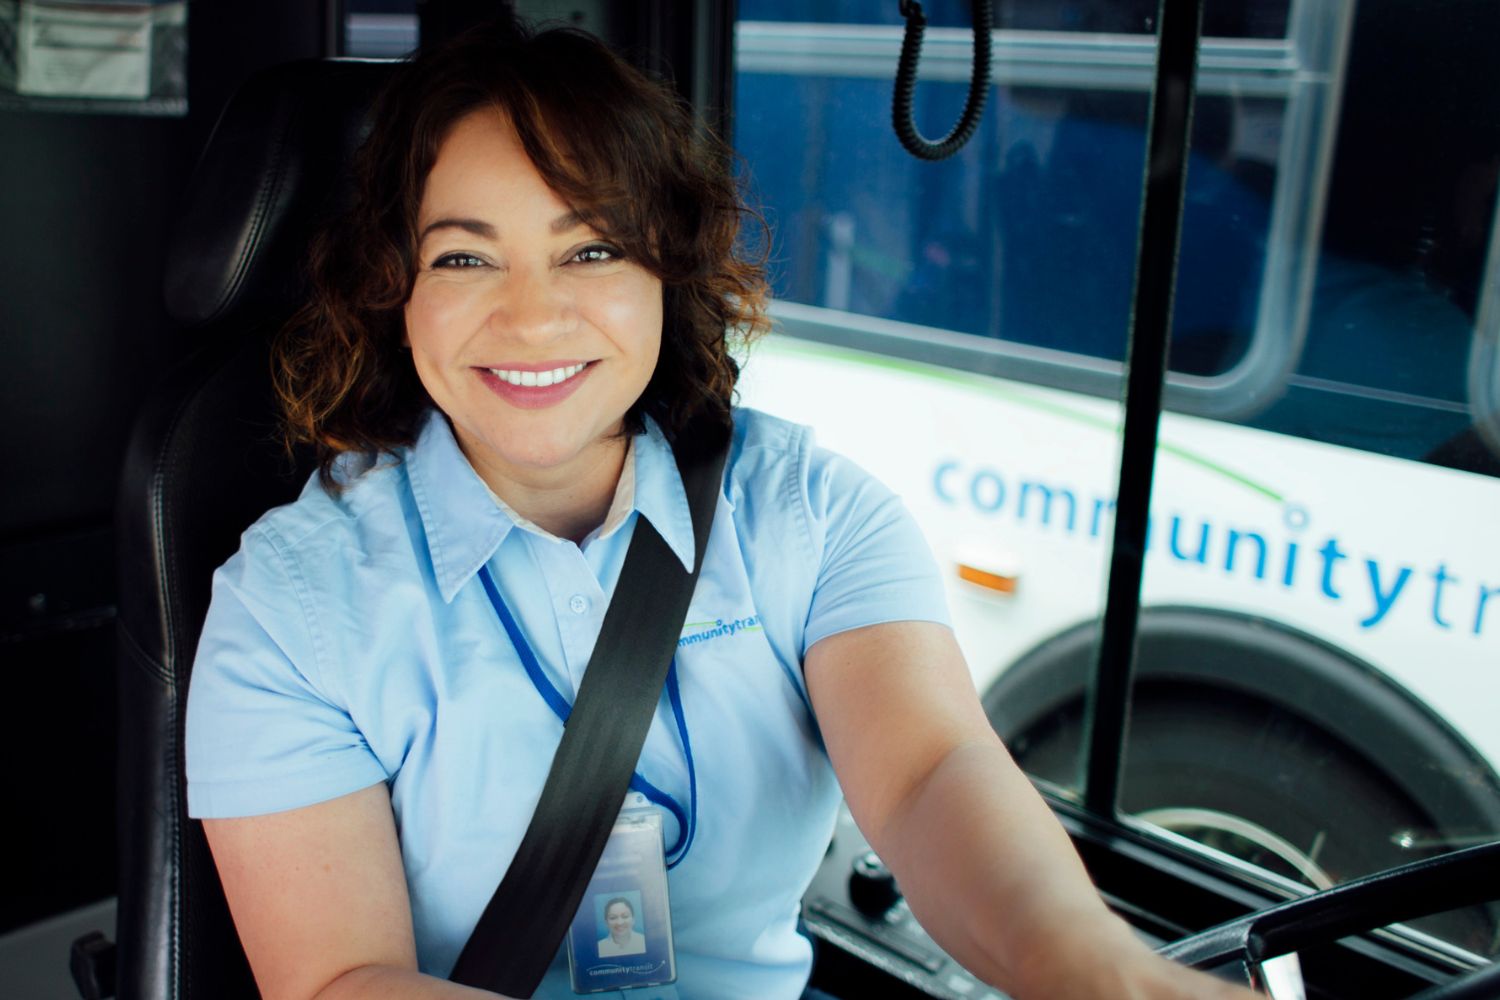 Now hiring bus drivers!